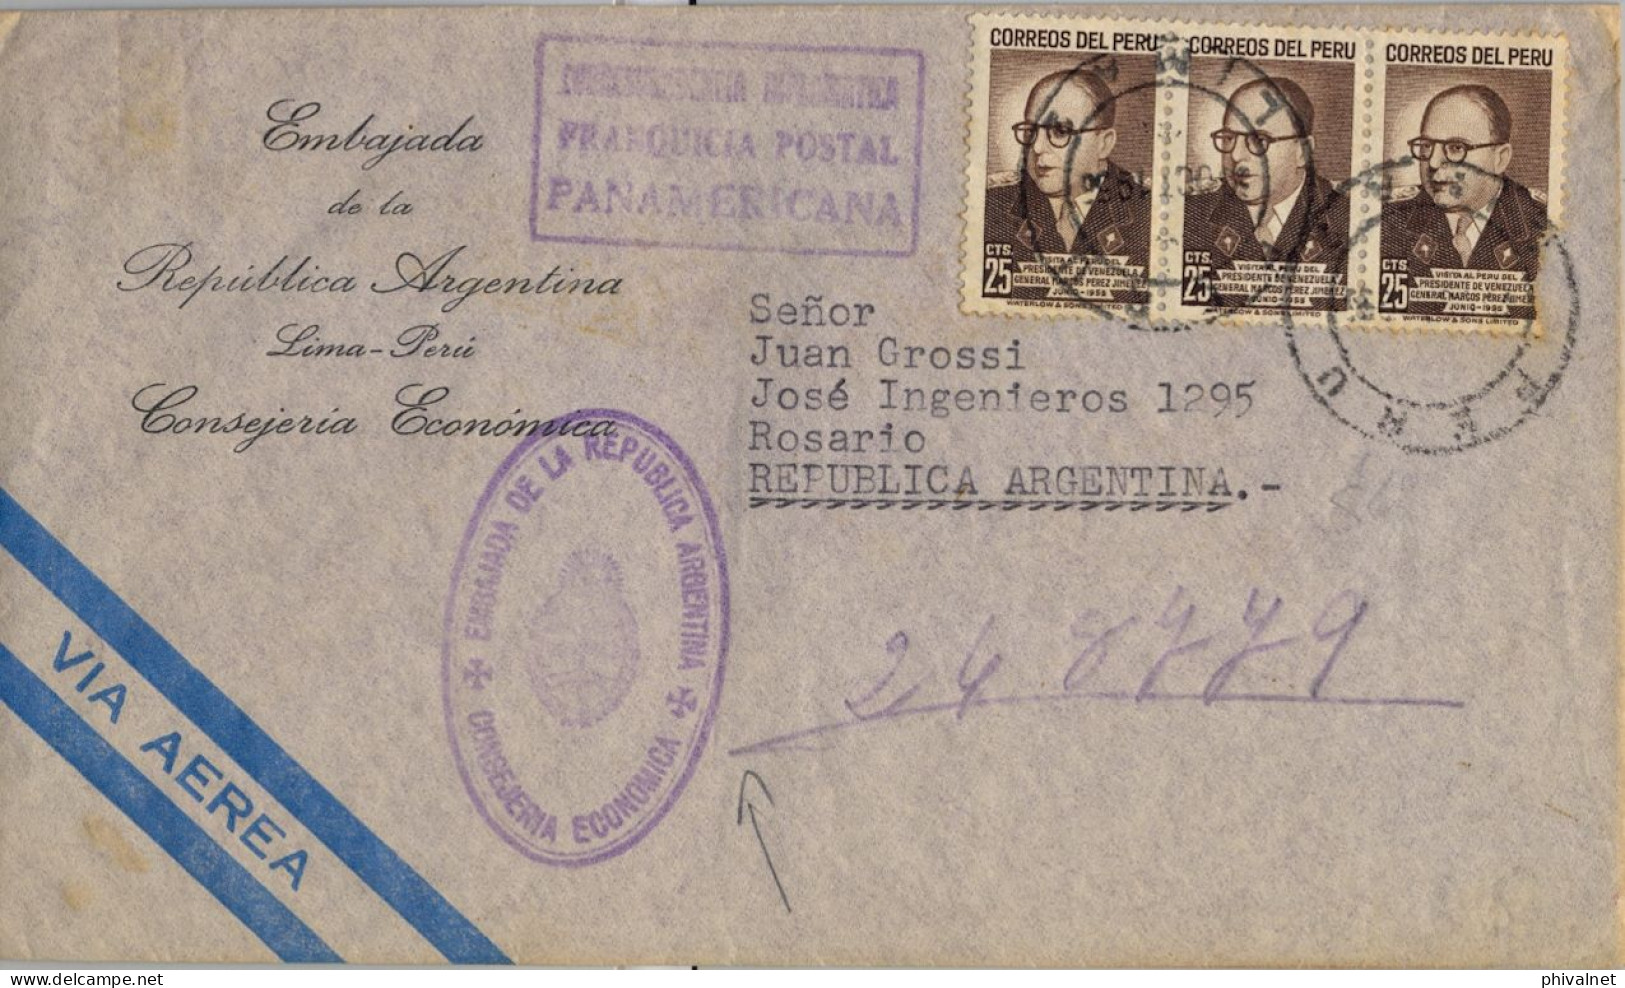 1956 PERÚ , CORREO CONSULAR , CORRESPONDENCIA DIPLOMÁTICA , FRANQUICIA POSTAL PANAMERICANA , CONSEJERIA ECONÓMICA - Peru